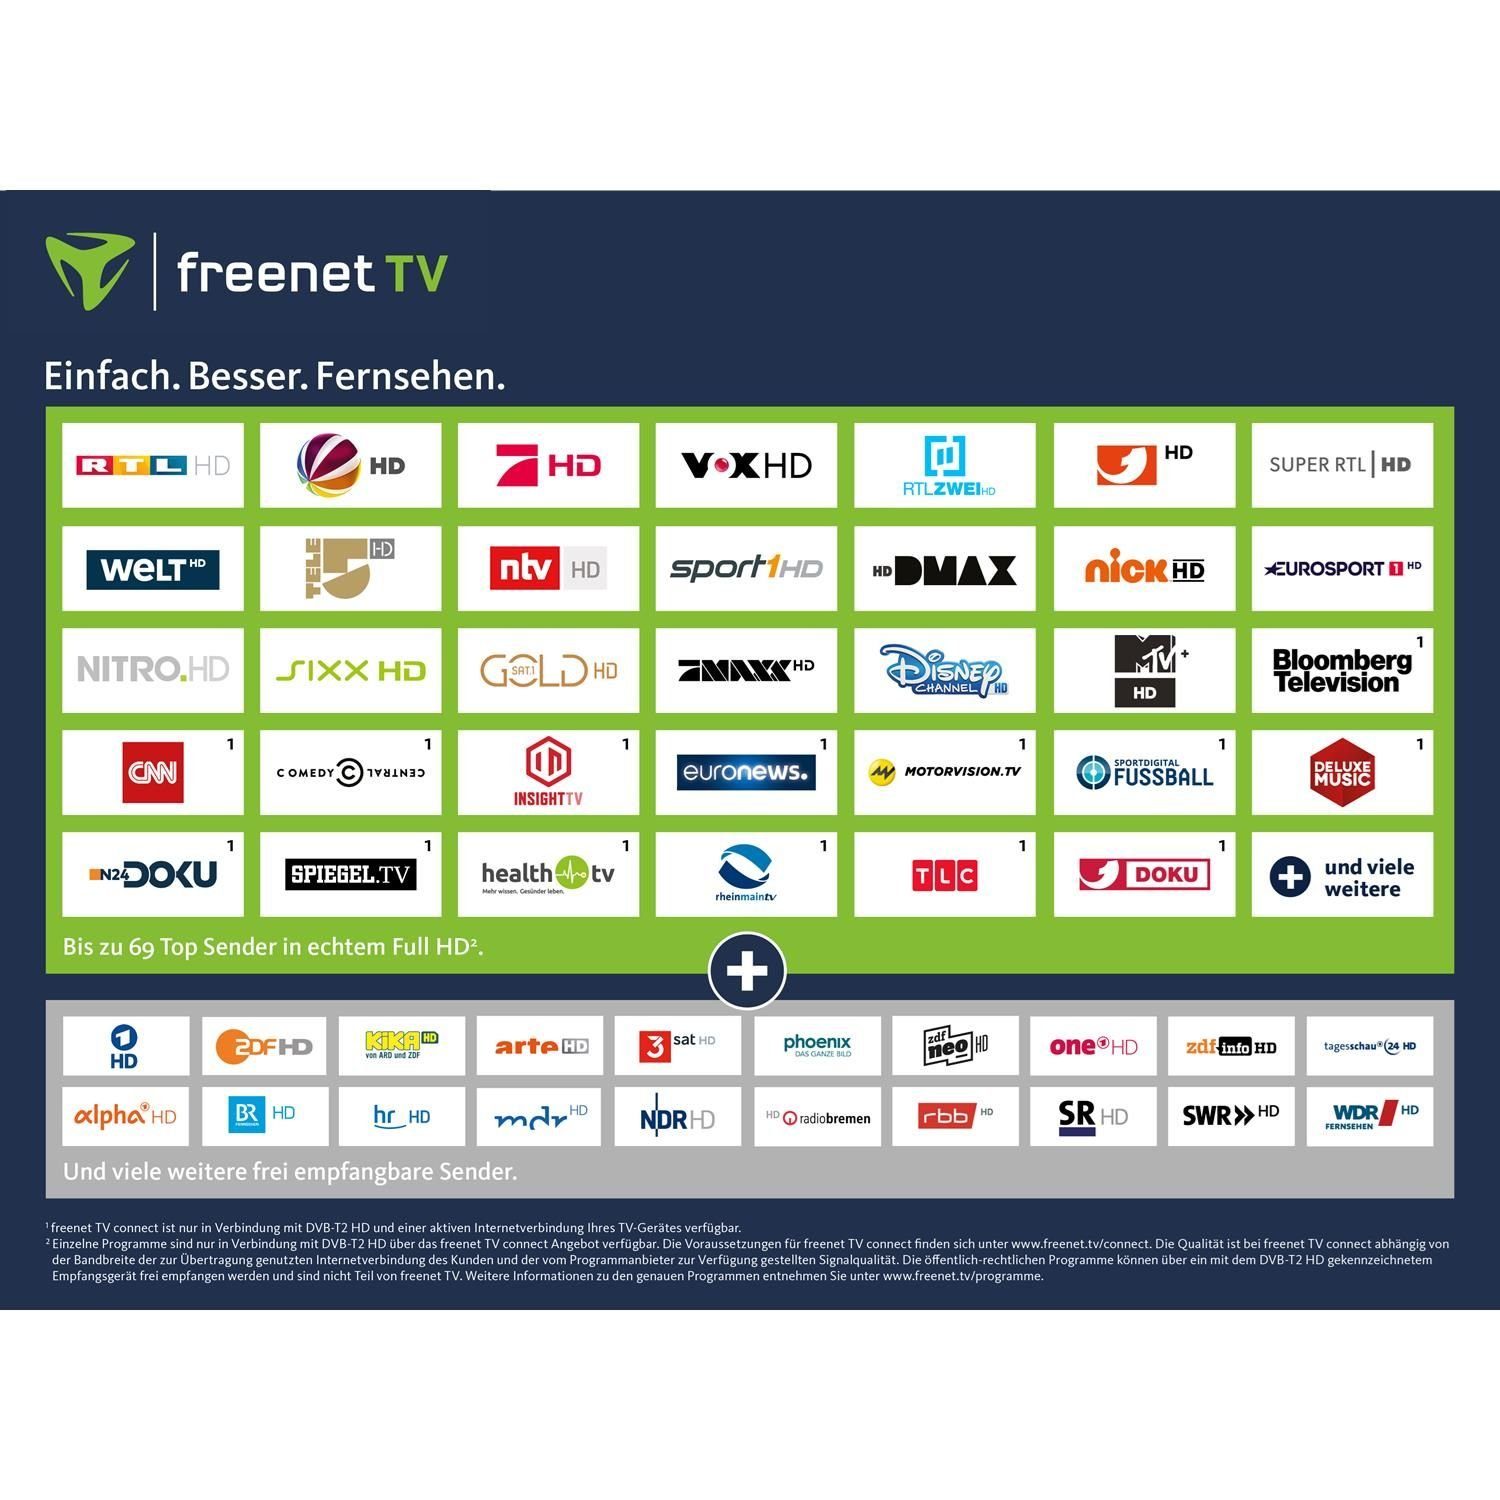 TELESTAR Diginova IR Receiver freenet DVB-T2 DVB-T2 HD HD/DVB-C T10 Receiver geeignet TV